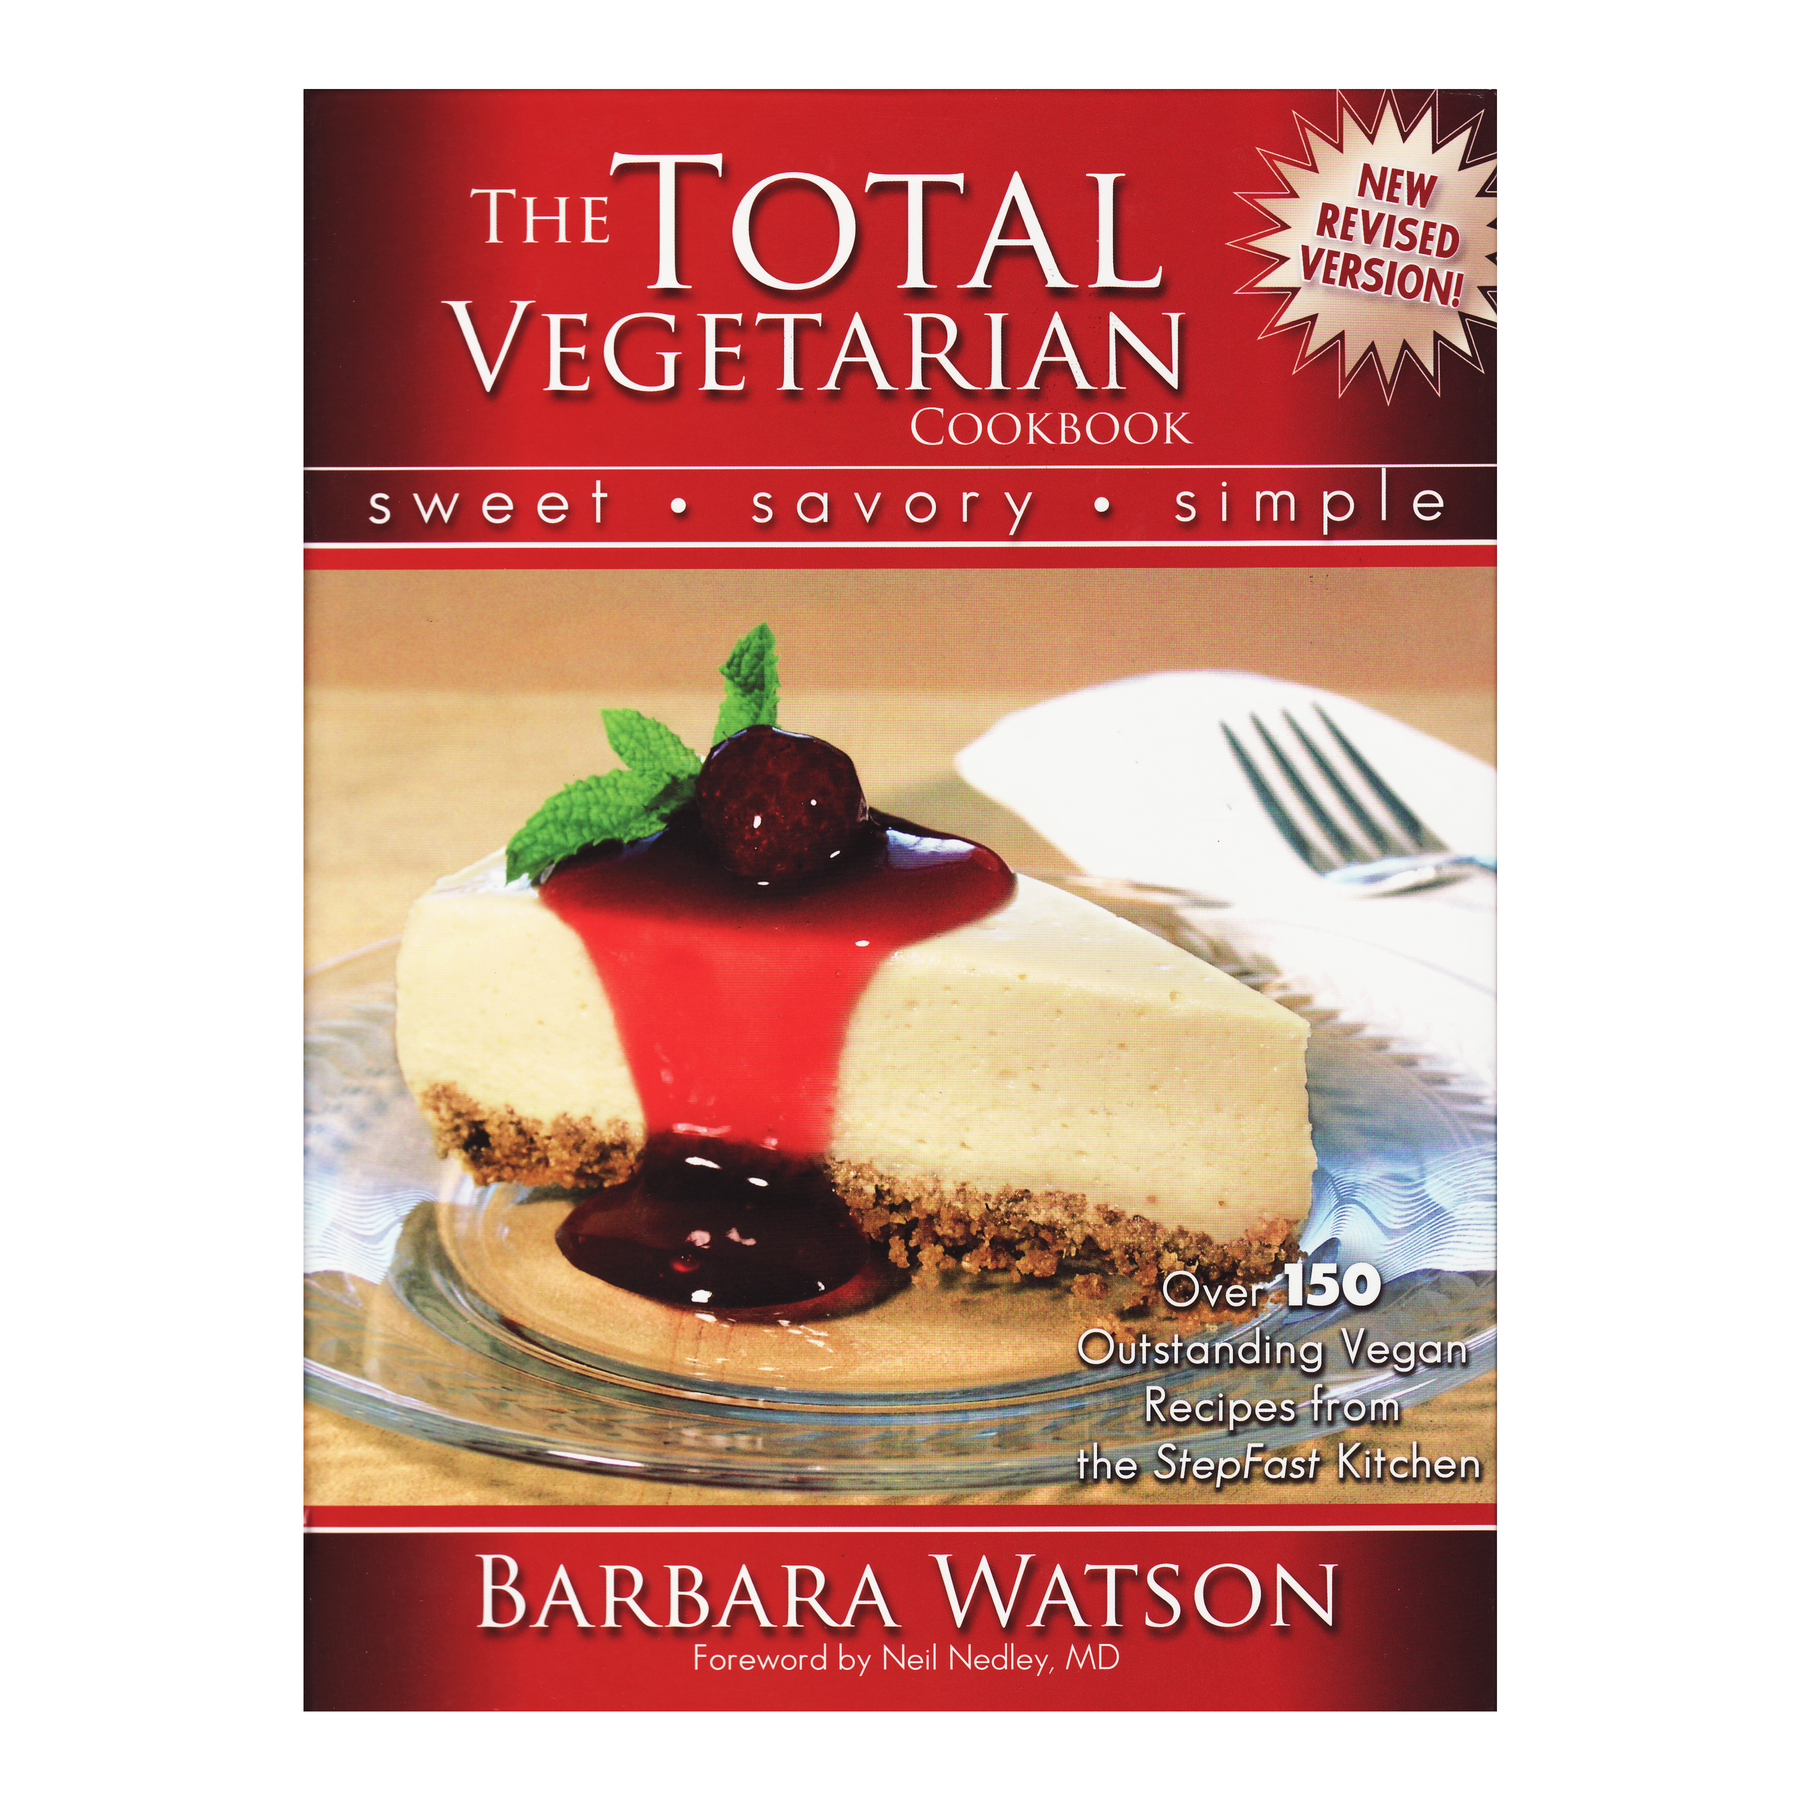 The Total Vegetarian Cookbook: Sweet - Savory - Simple Book (Hardcover) by Barbara Watson